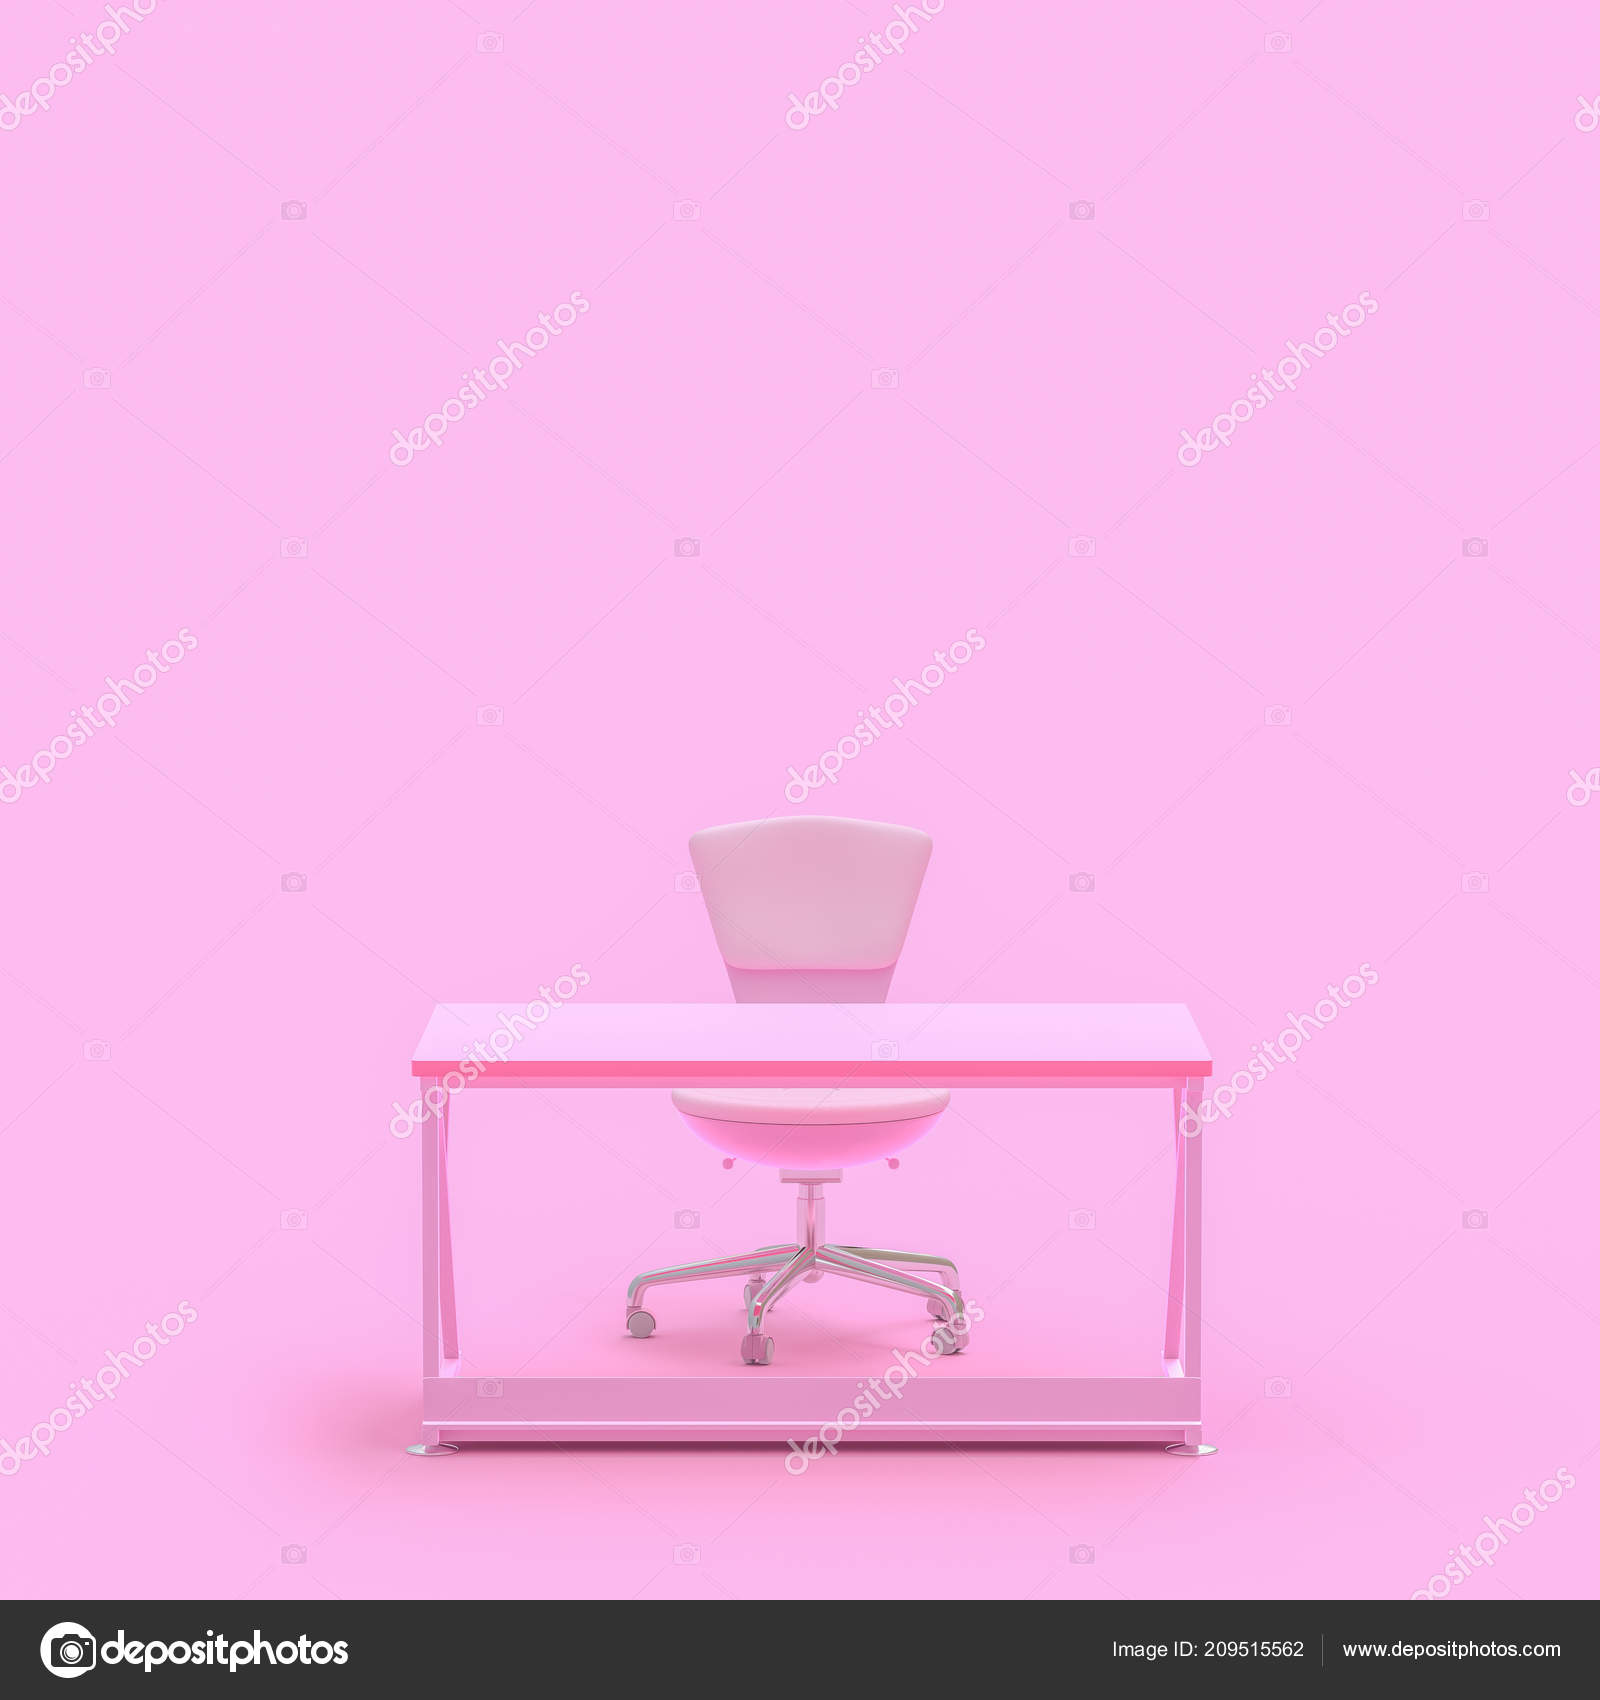 Coffee Table - HD Wallpaper 